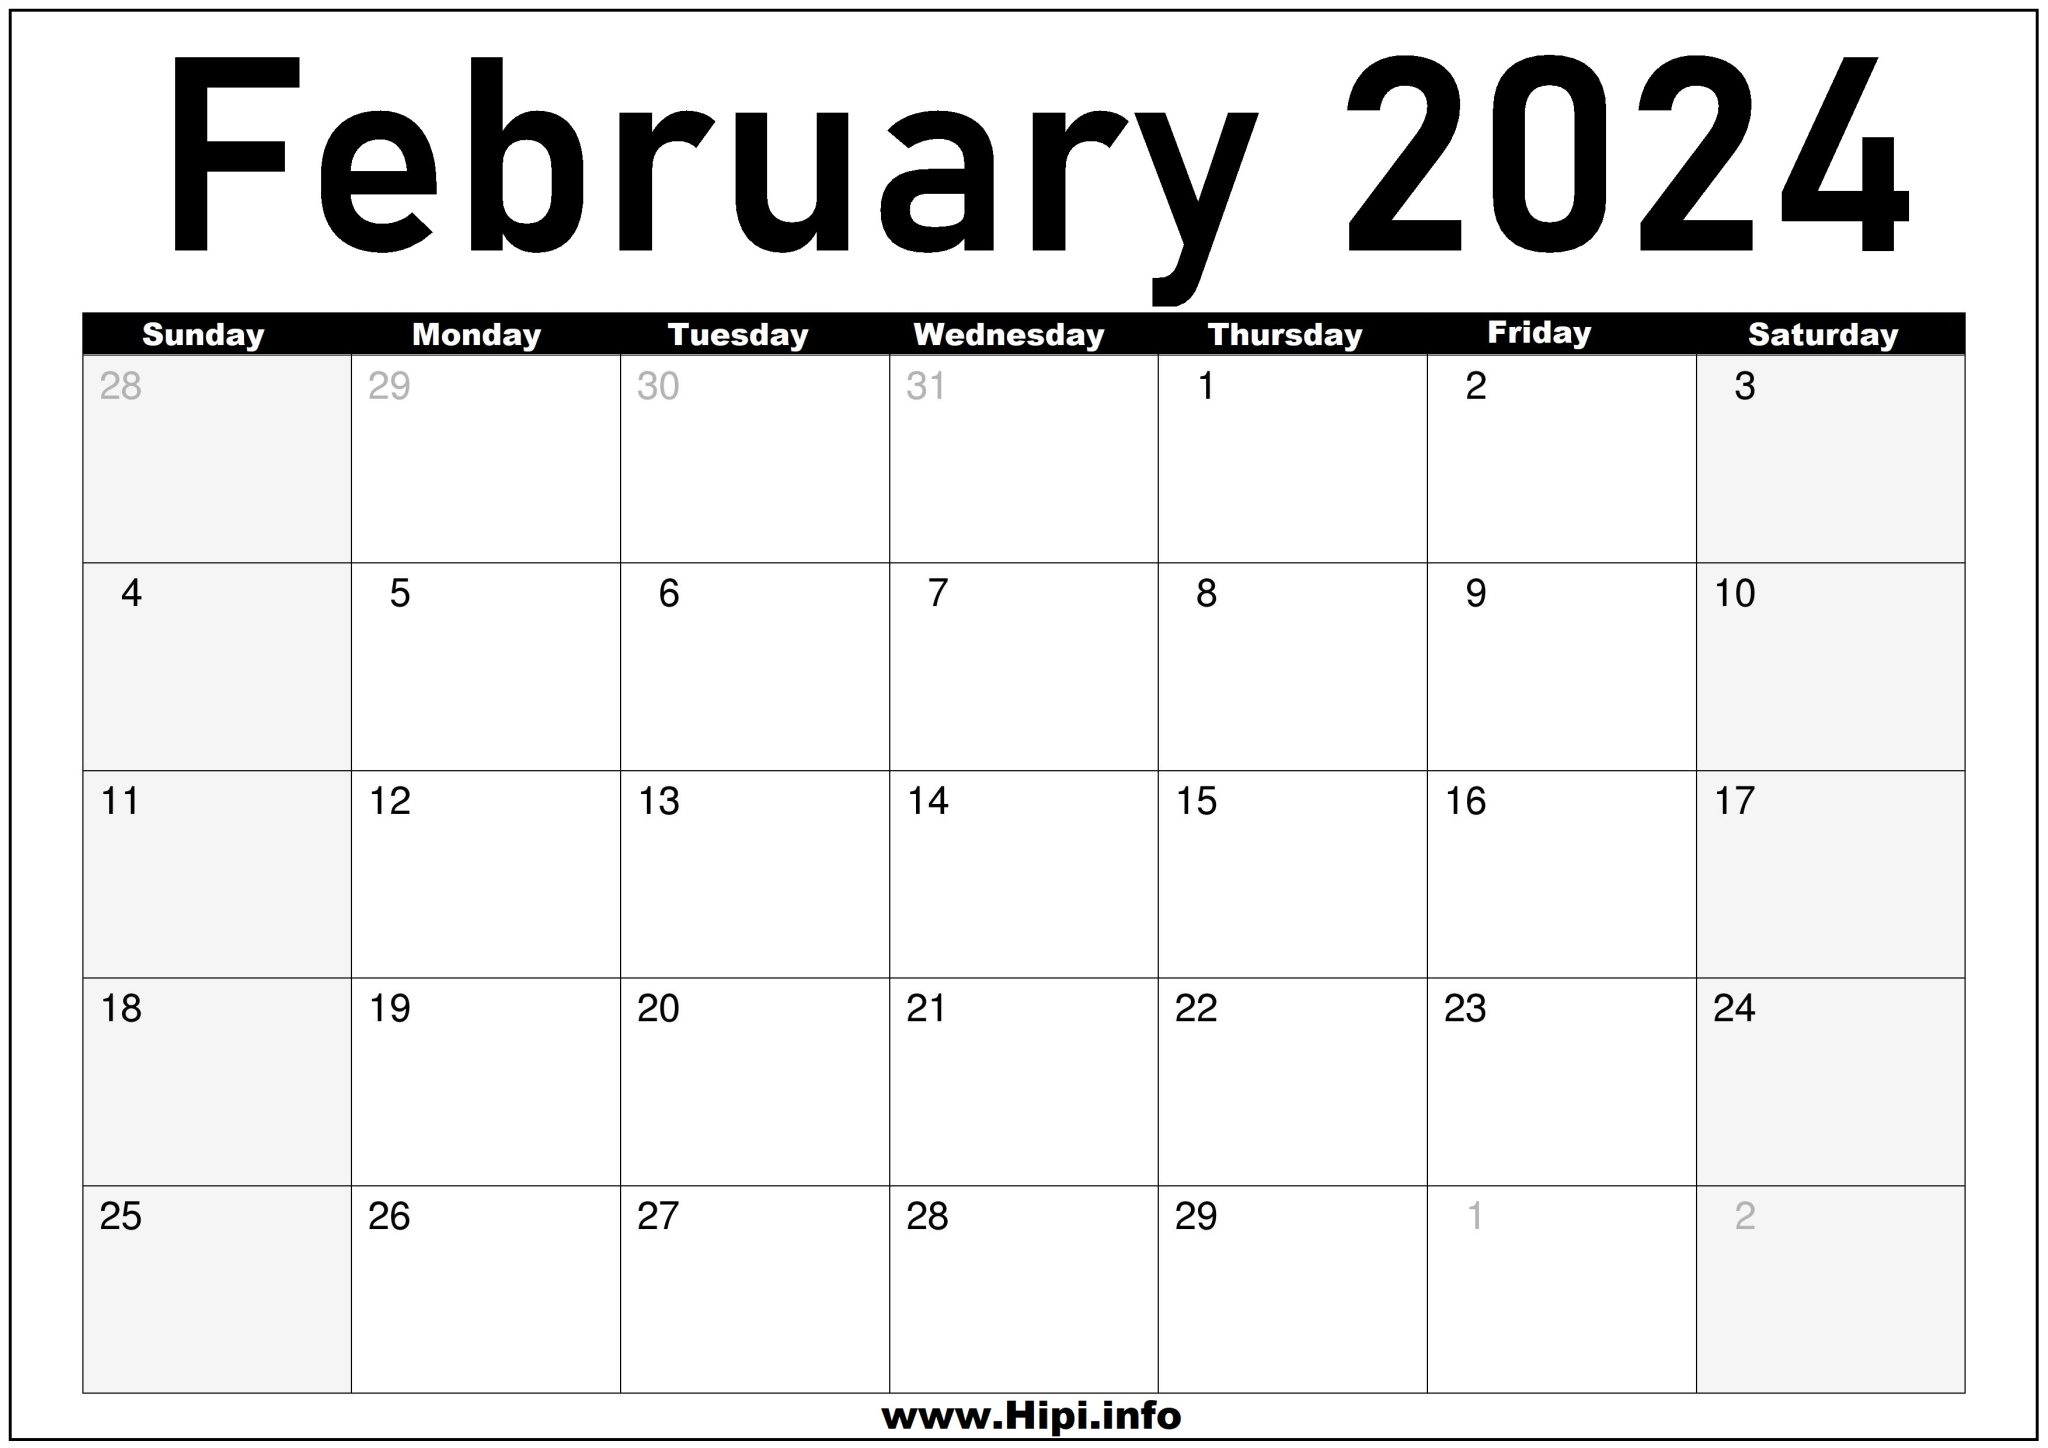 February 2024 Calendar 01 2048x1448 